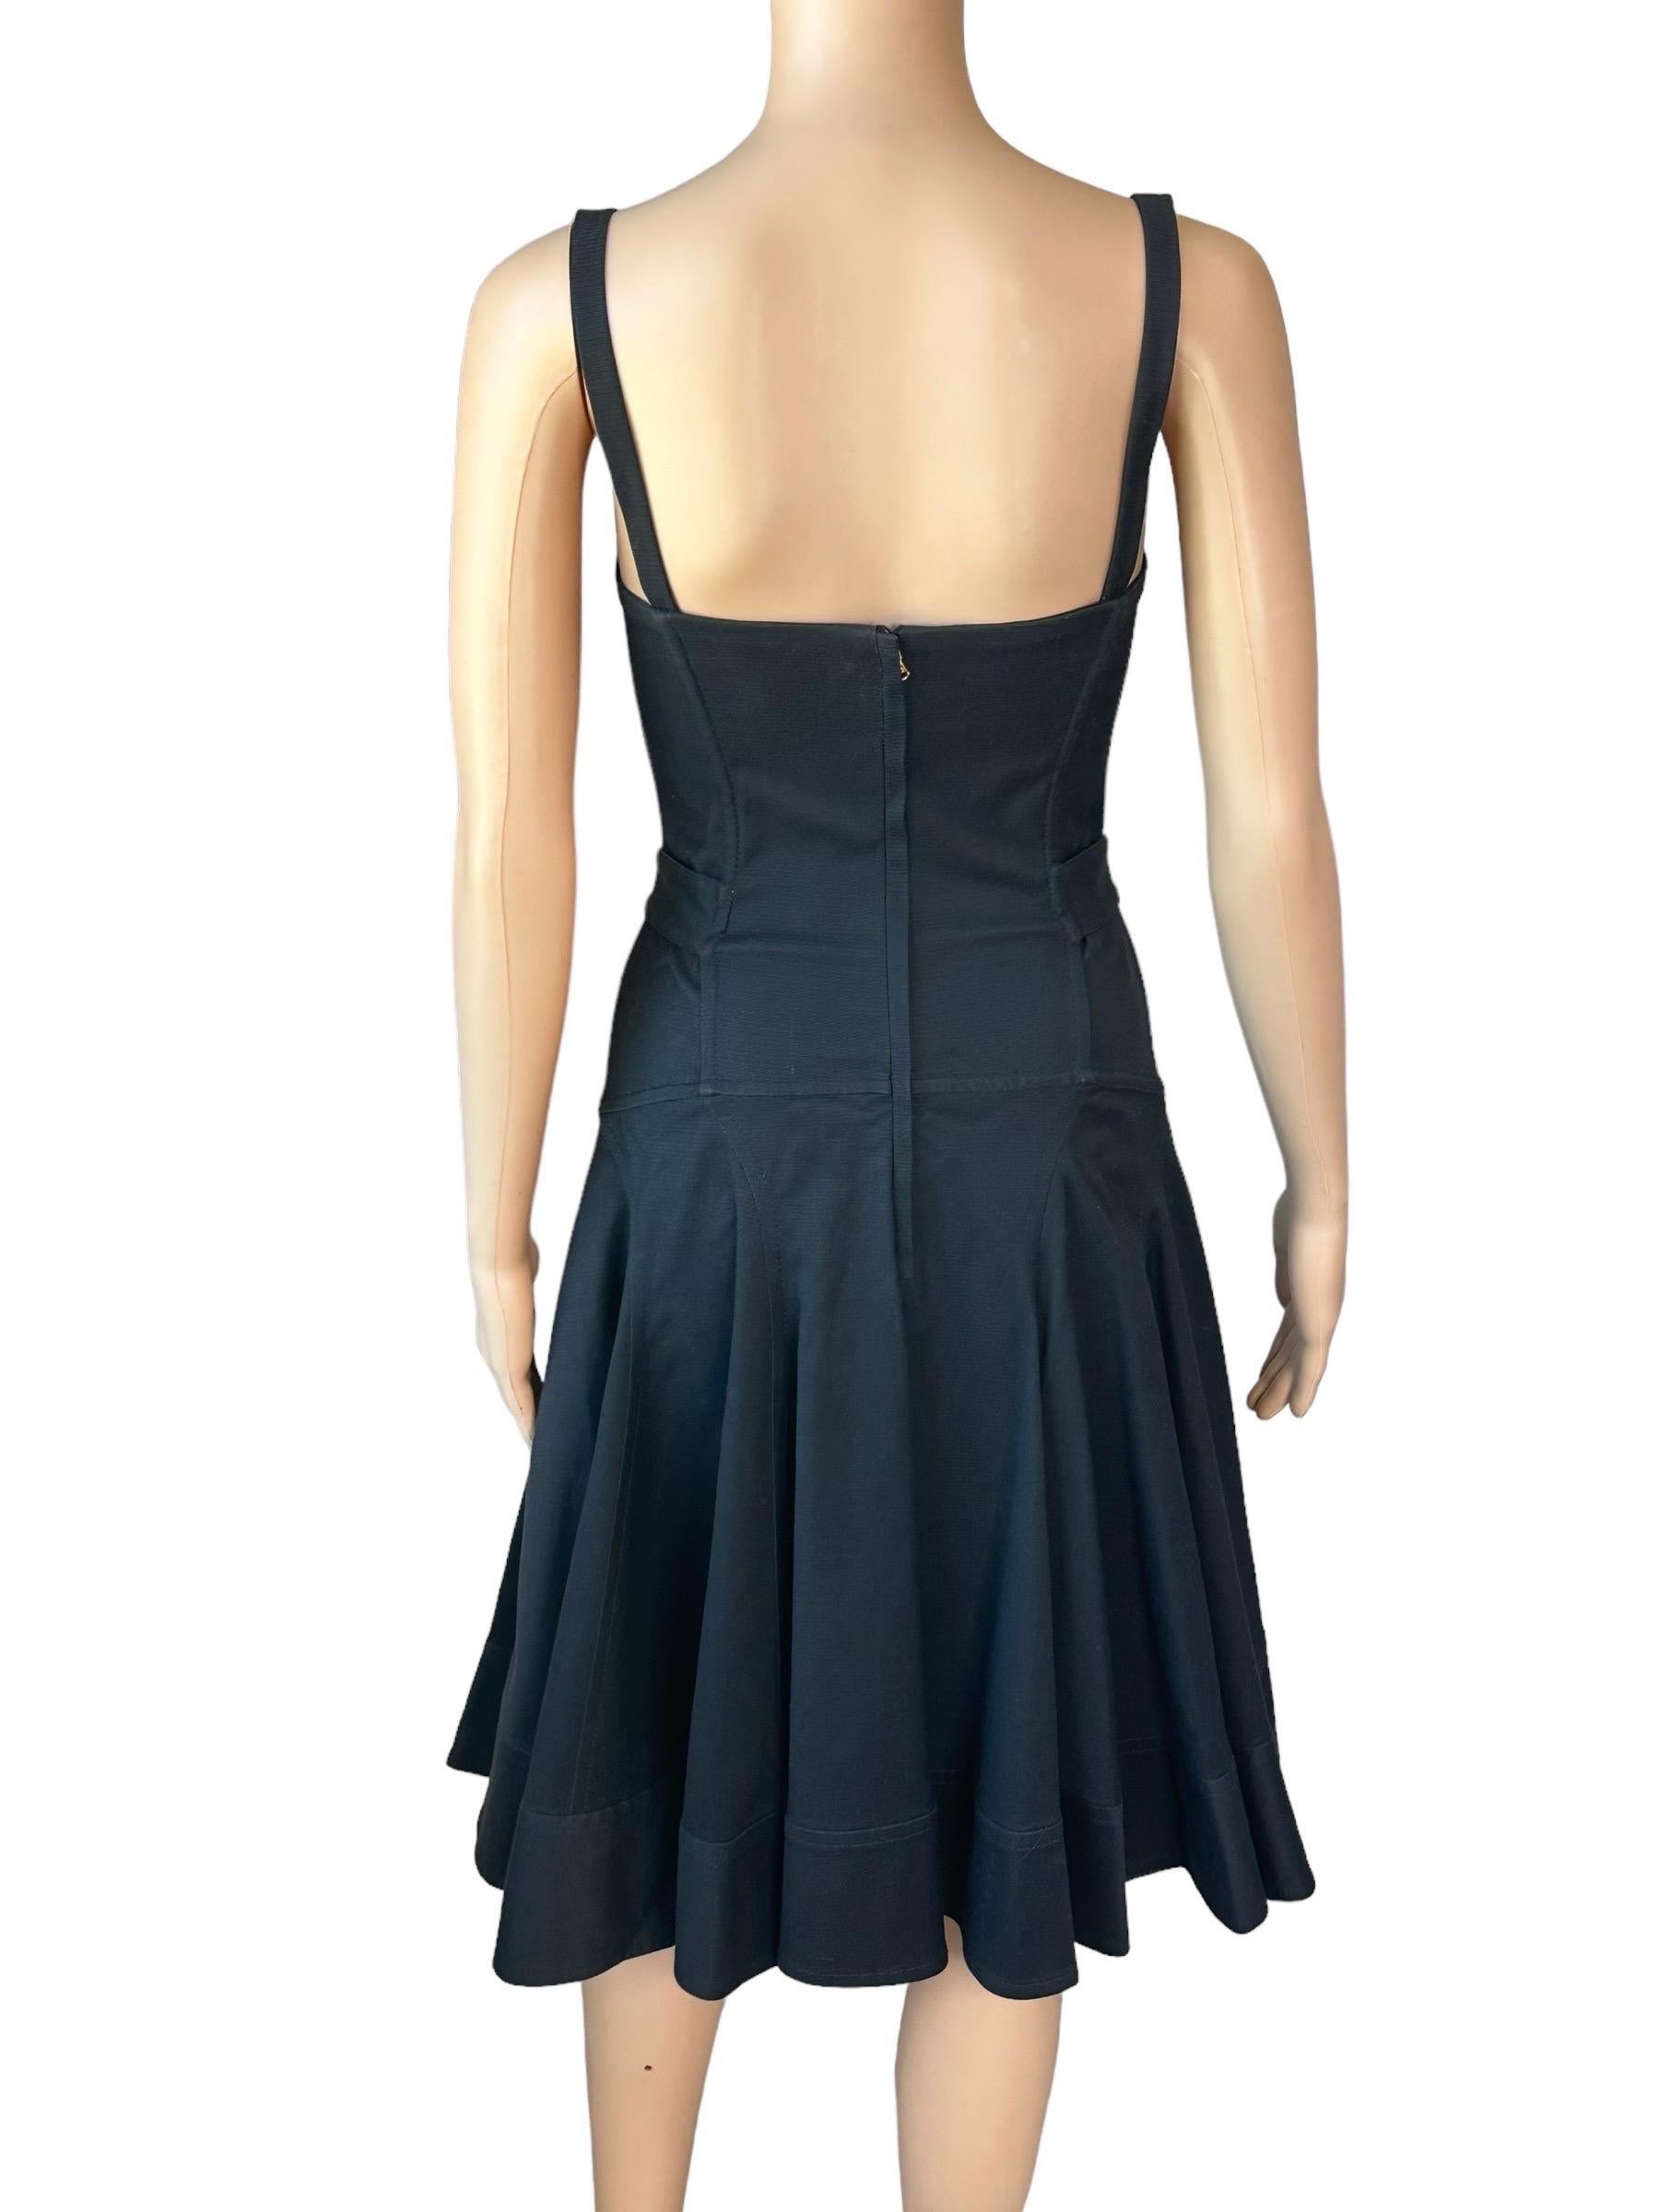 Dolce & Gabbana S/S 2007 Unworn Corset Lace-Up Bustier Black Dress For Sale 3